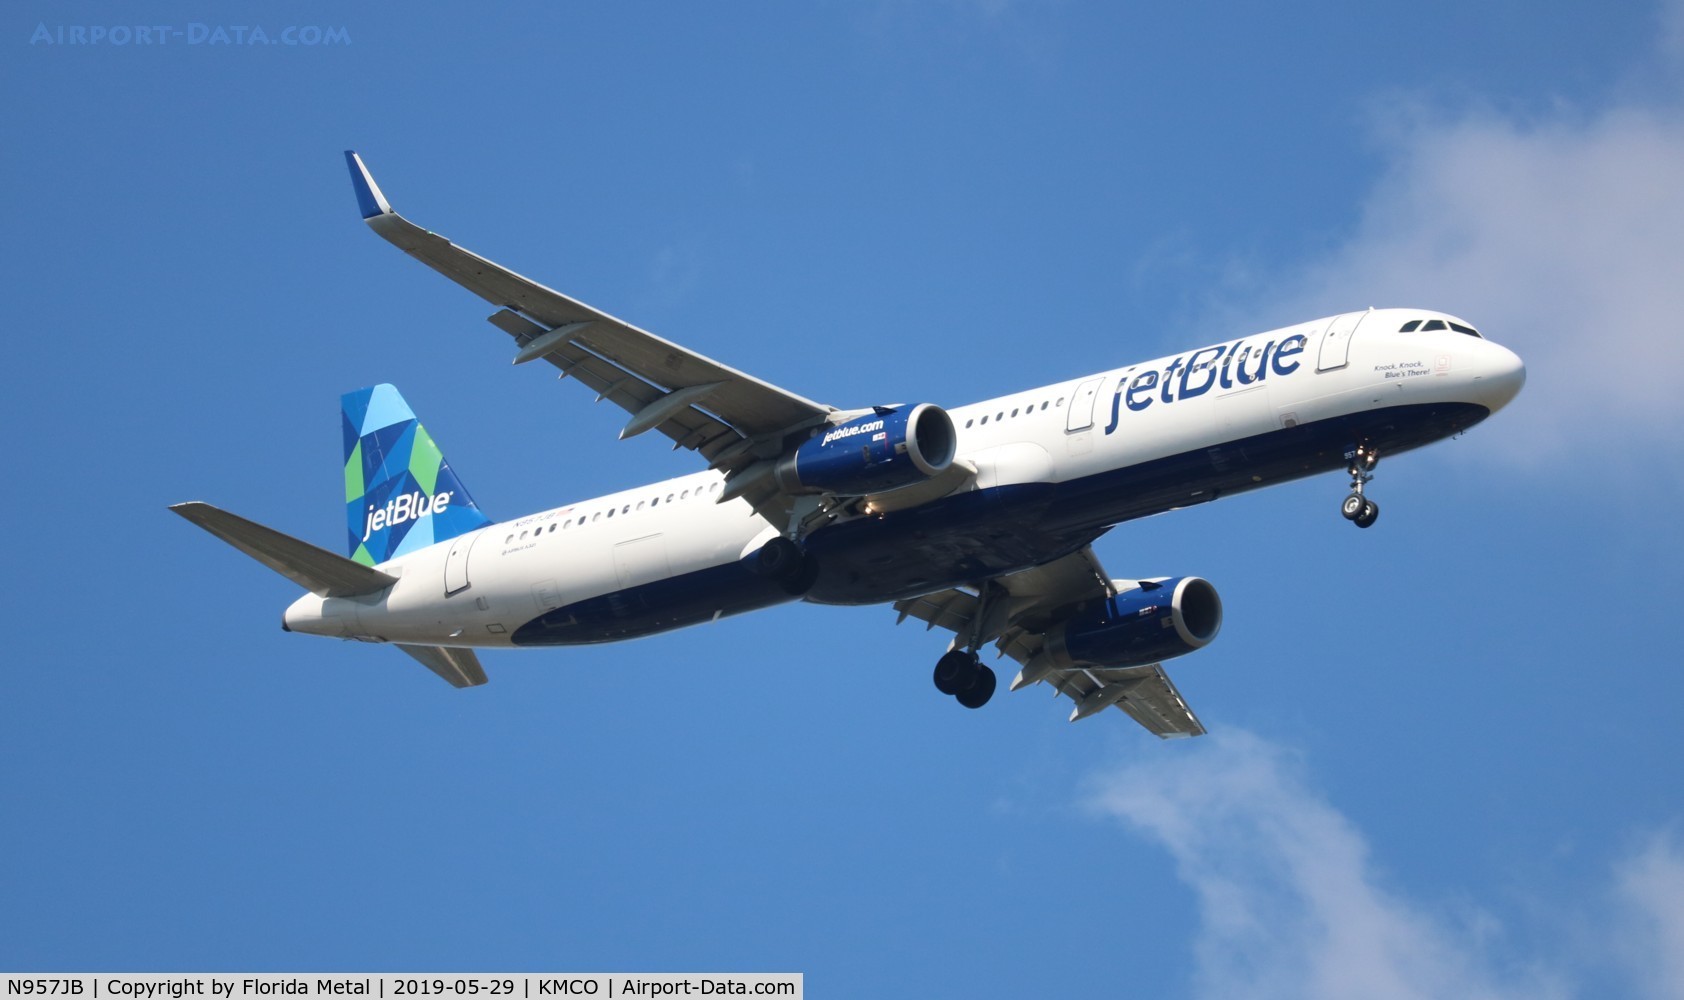 N957JB, 2015 Airbus A321-231 C/N 6809, JetBlue